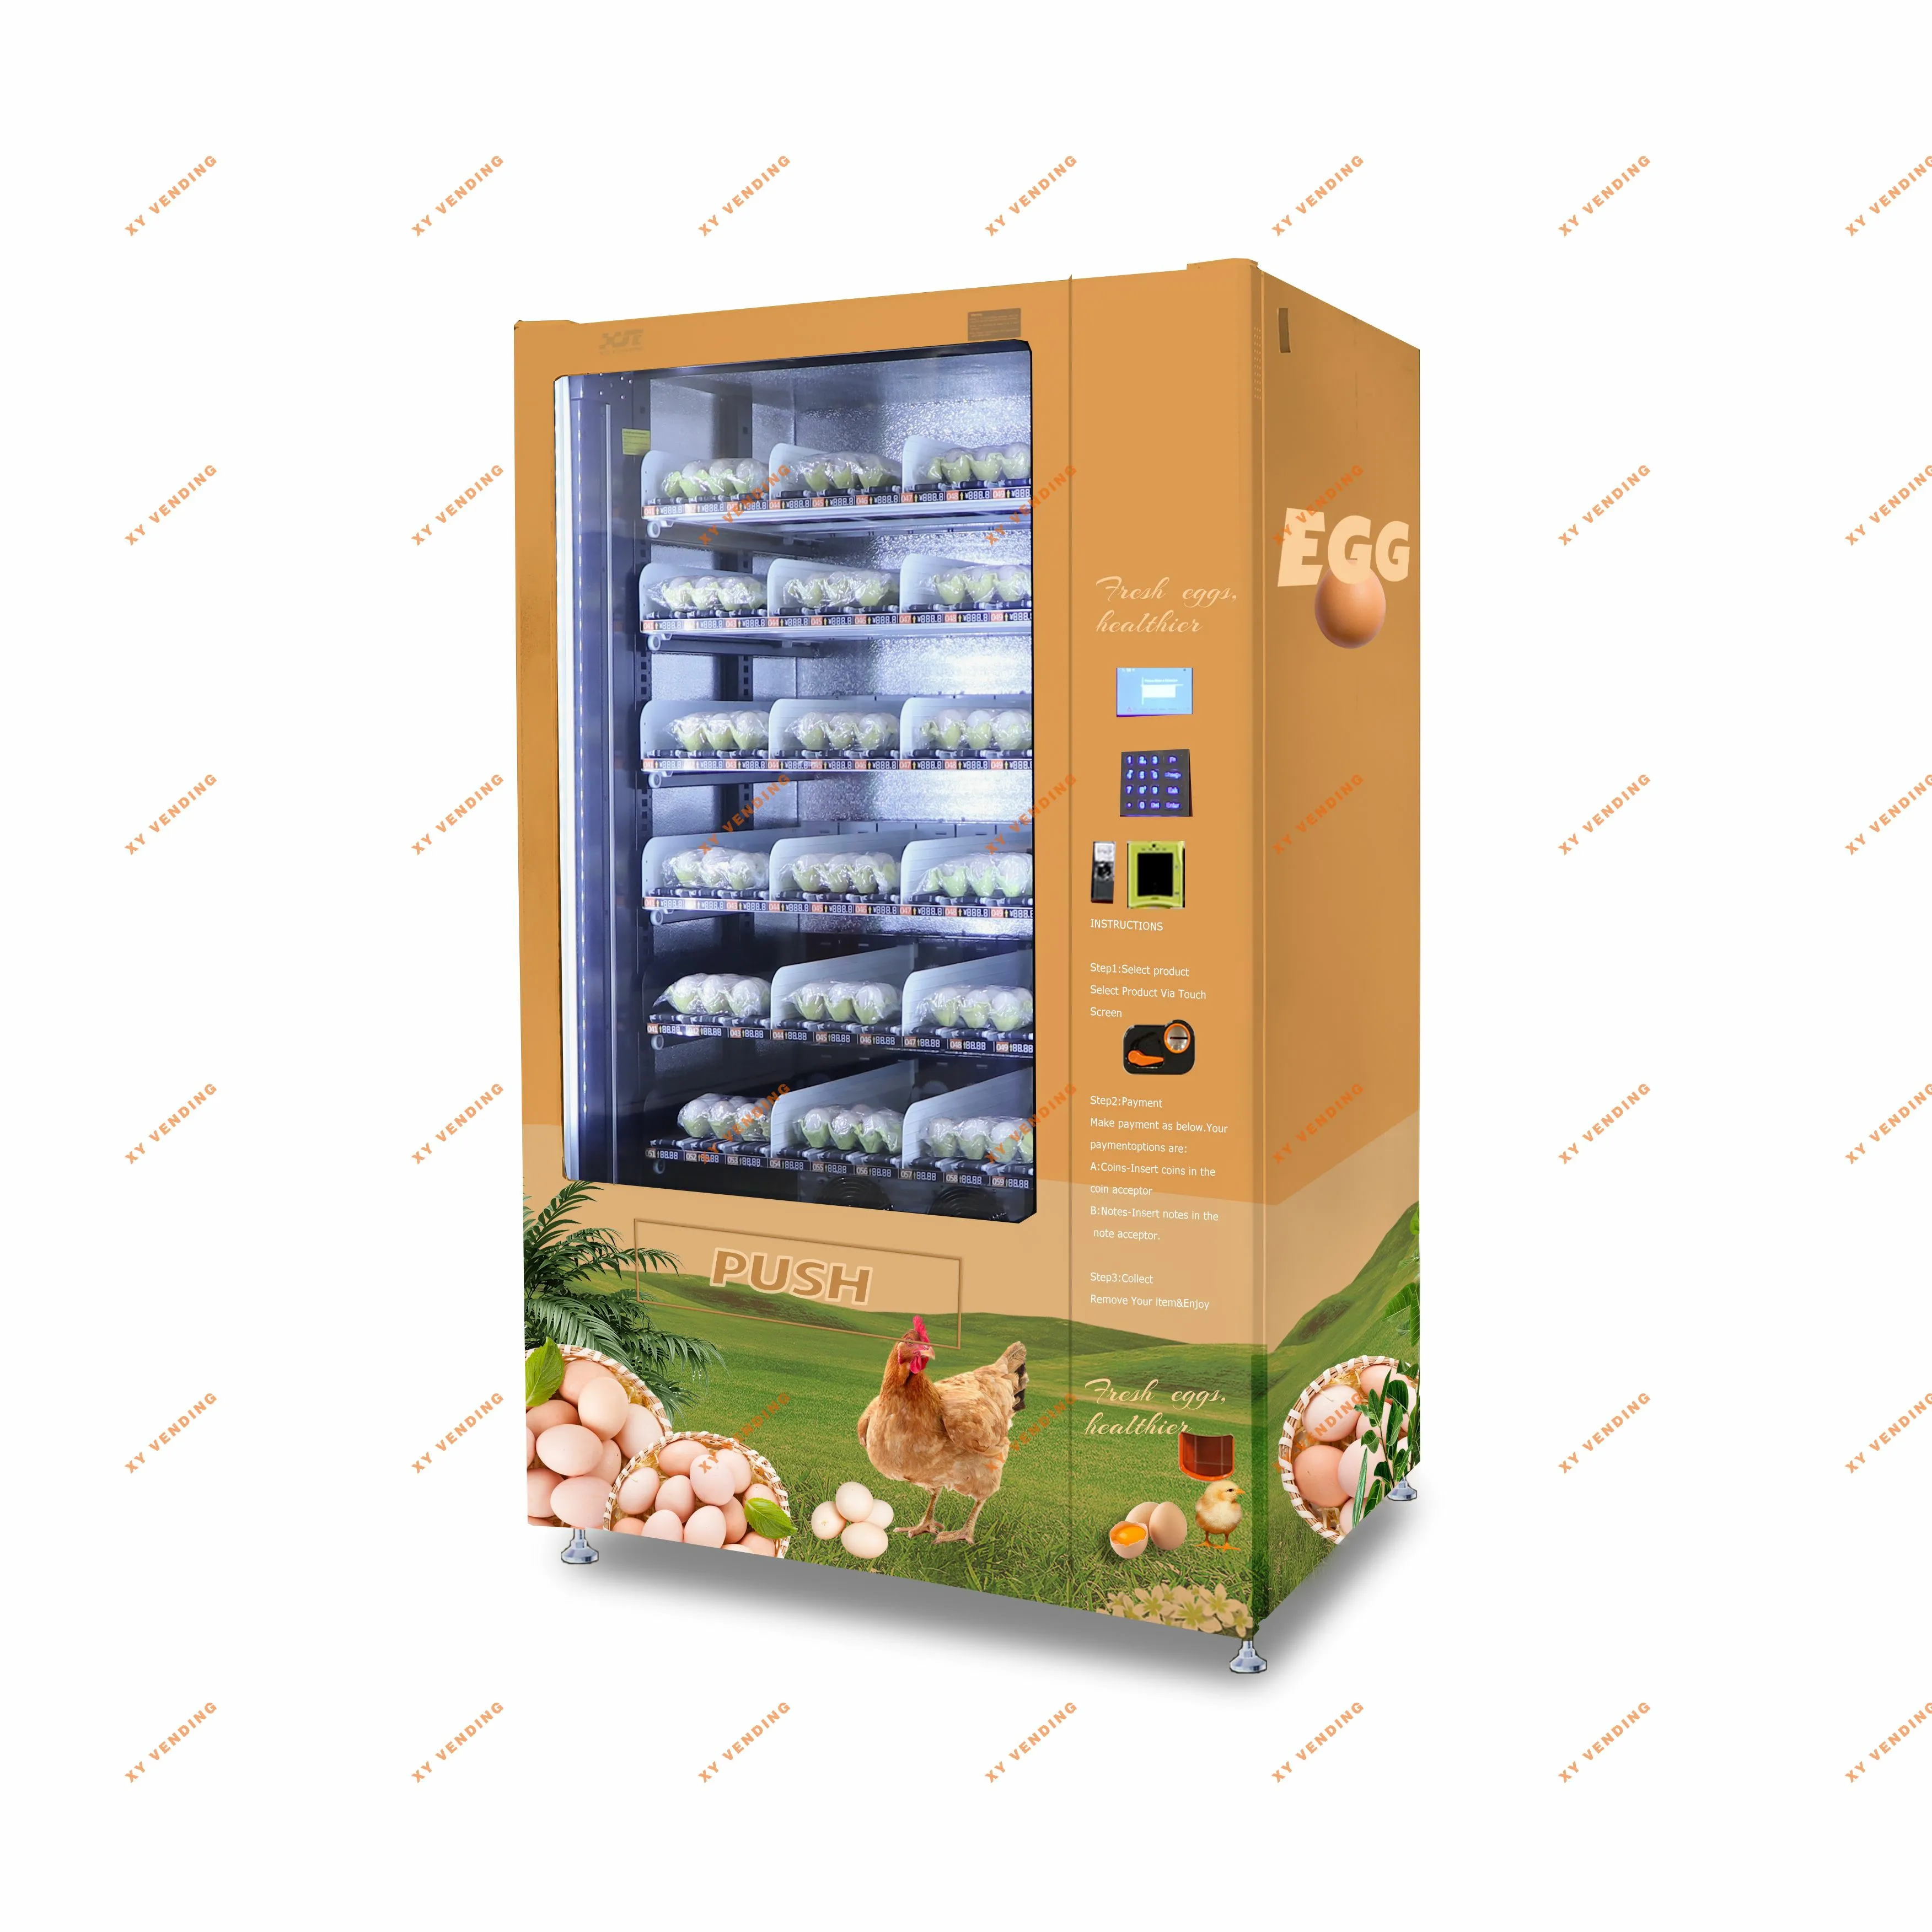 XY Vending machine——Egg vending machine~